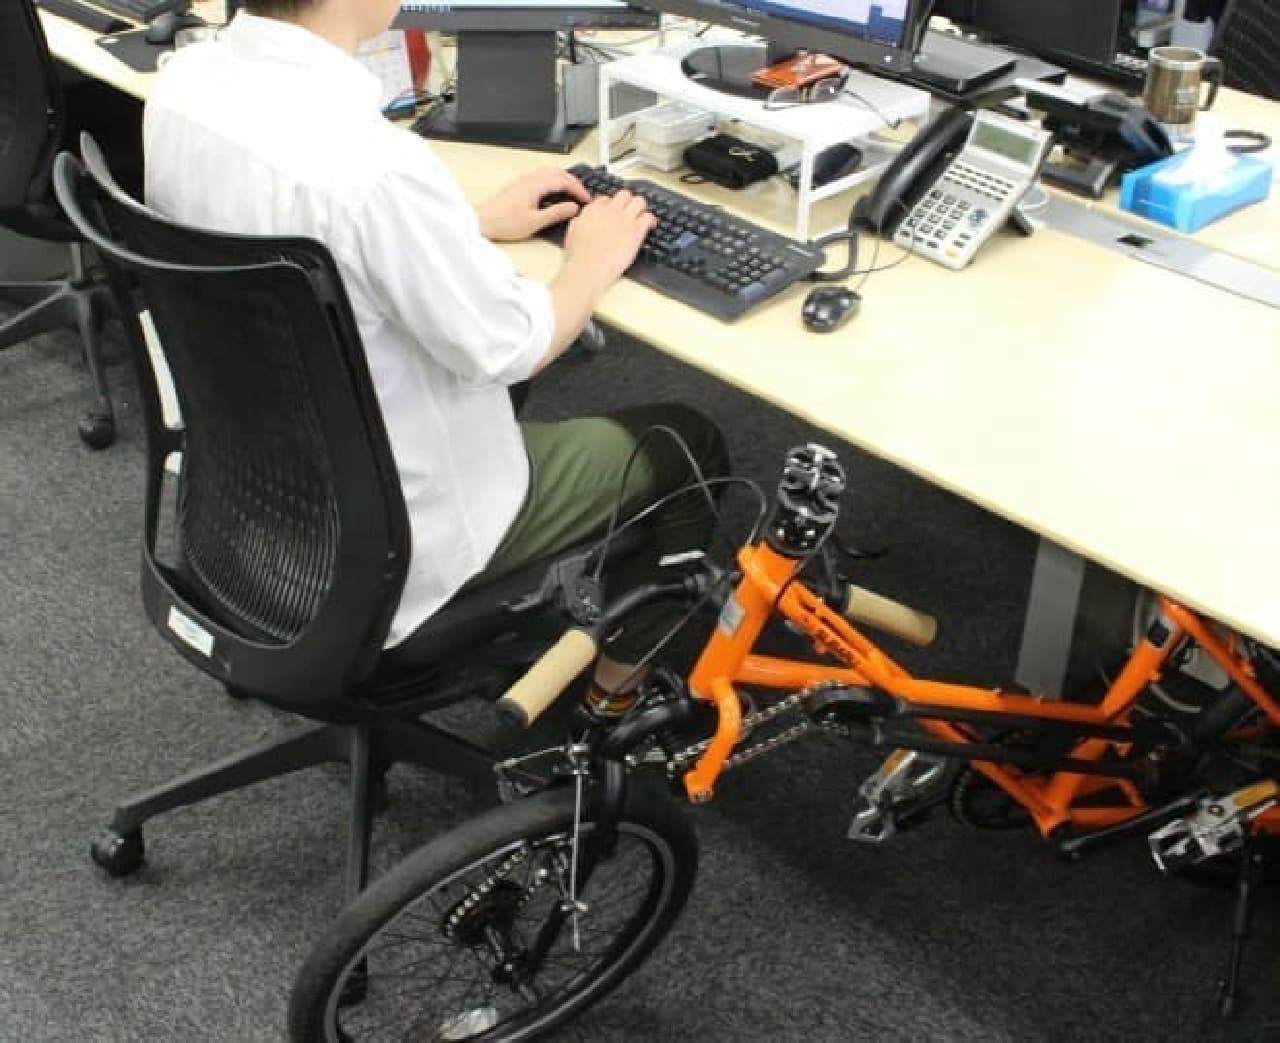 SUBARUが「SUBARUオリジナルデザインAWD自転車」を台数限定で発売。